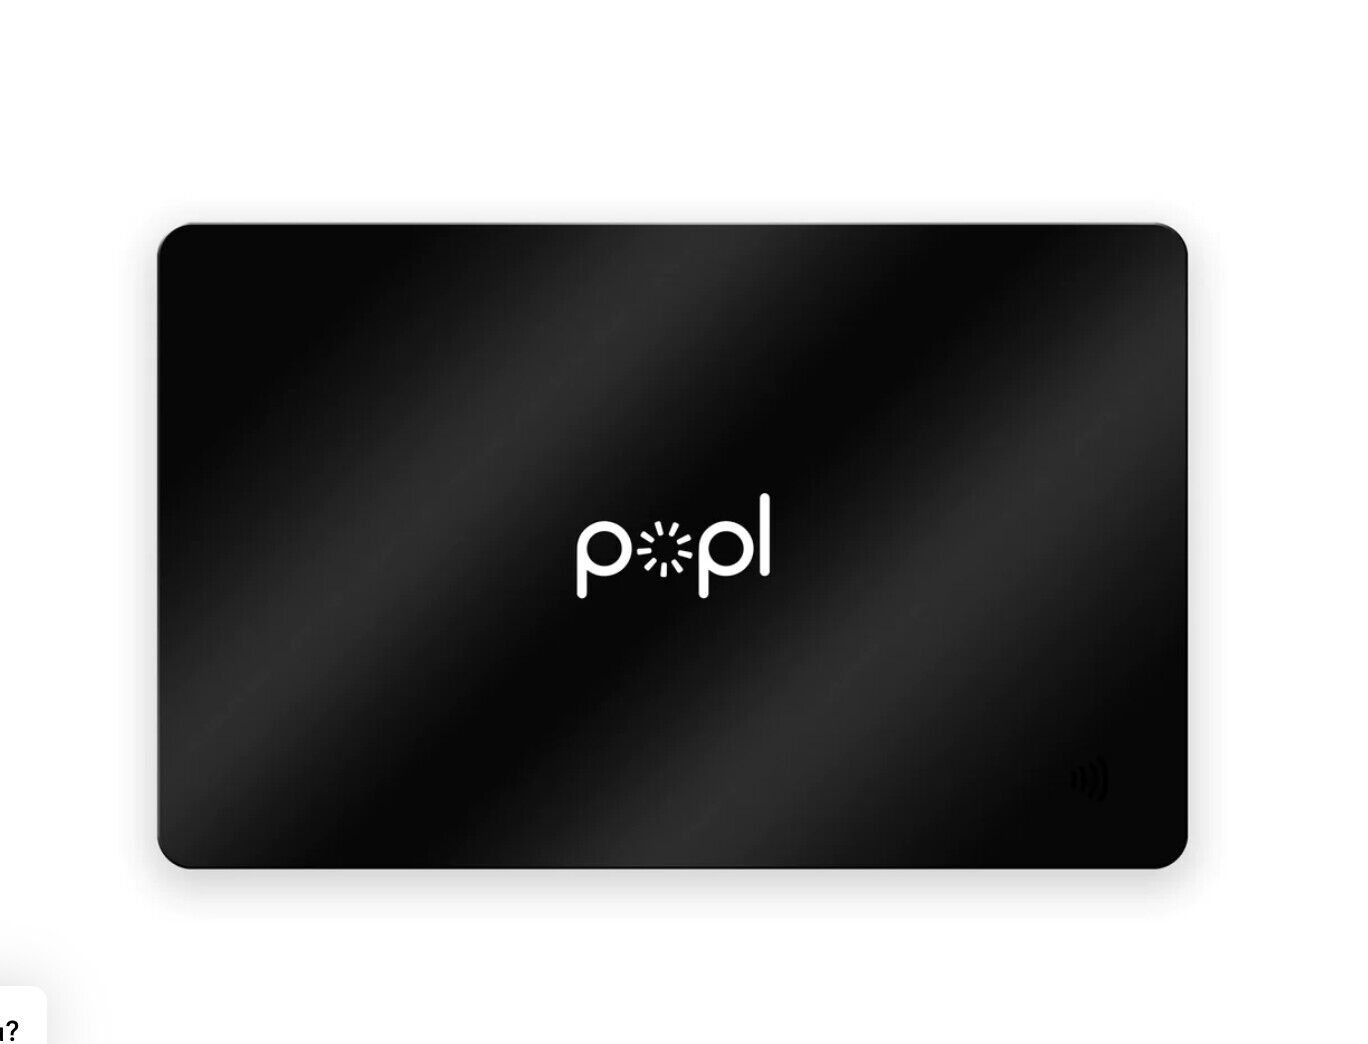 Popl Digital Business Card - Smart NFC Networking Card - Tap to Share Popl